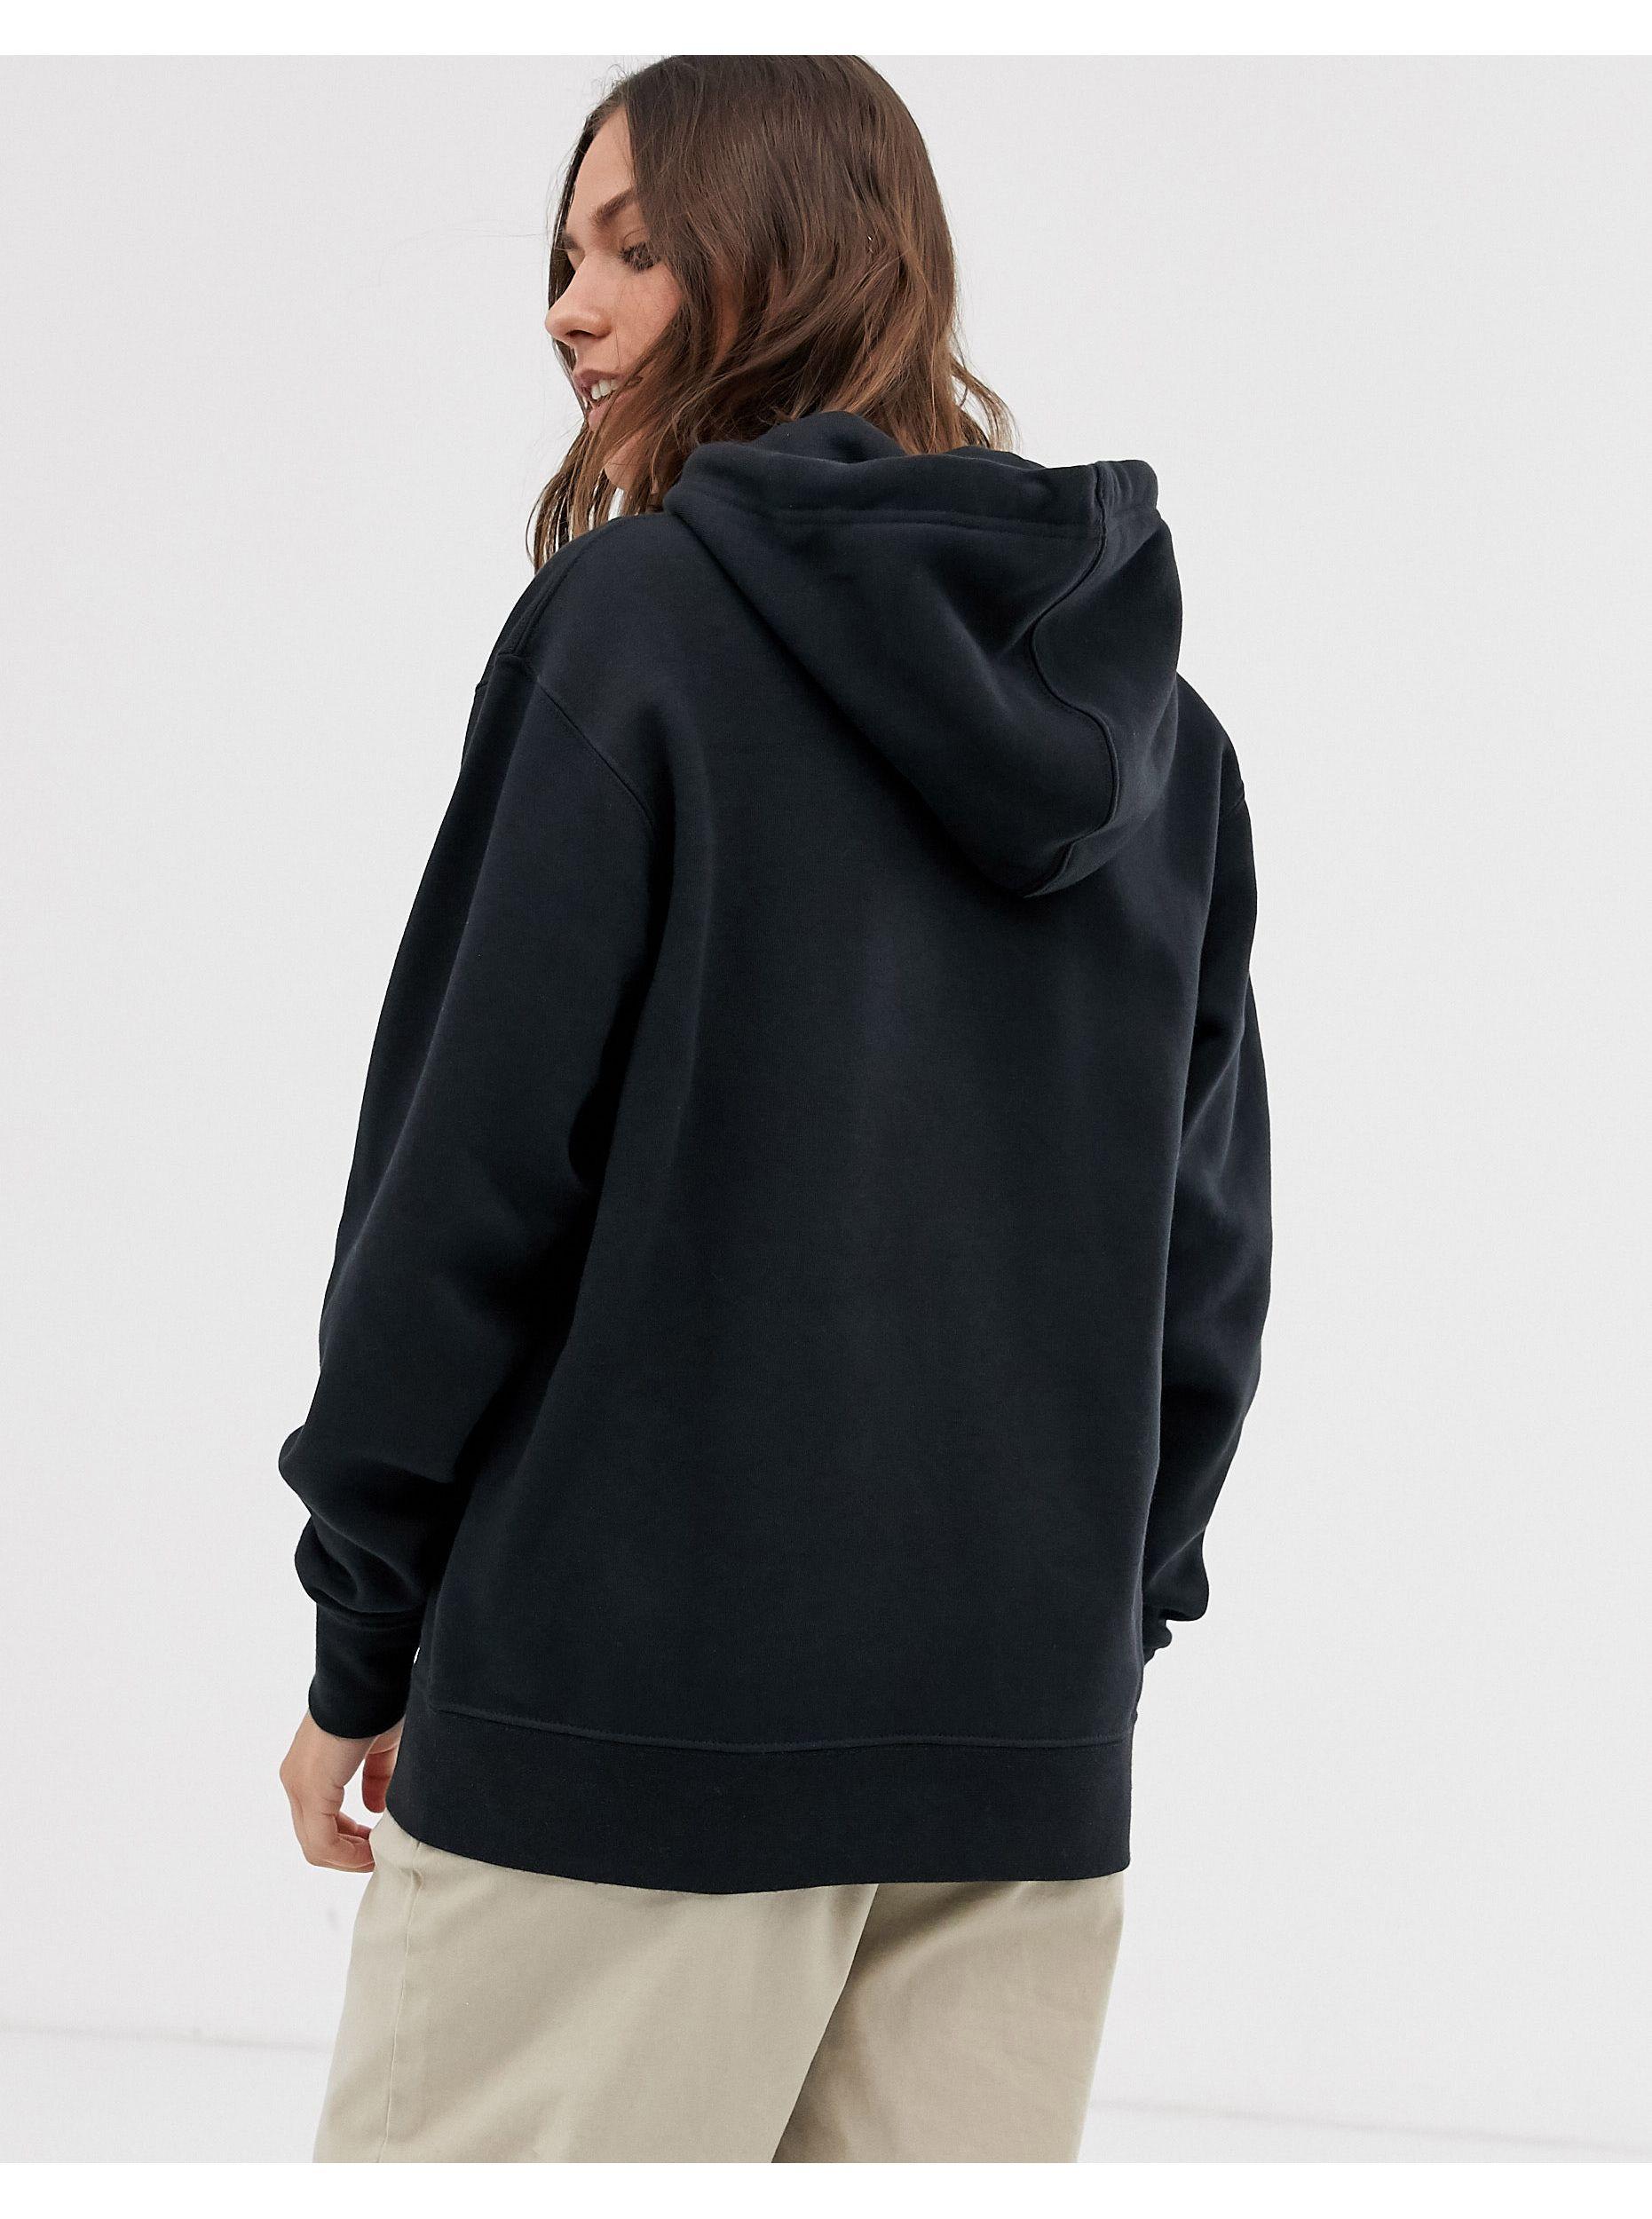 oversized grey nike hoodie